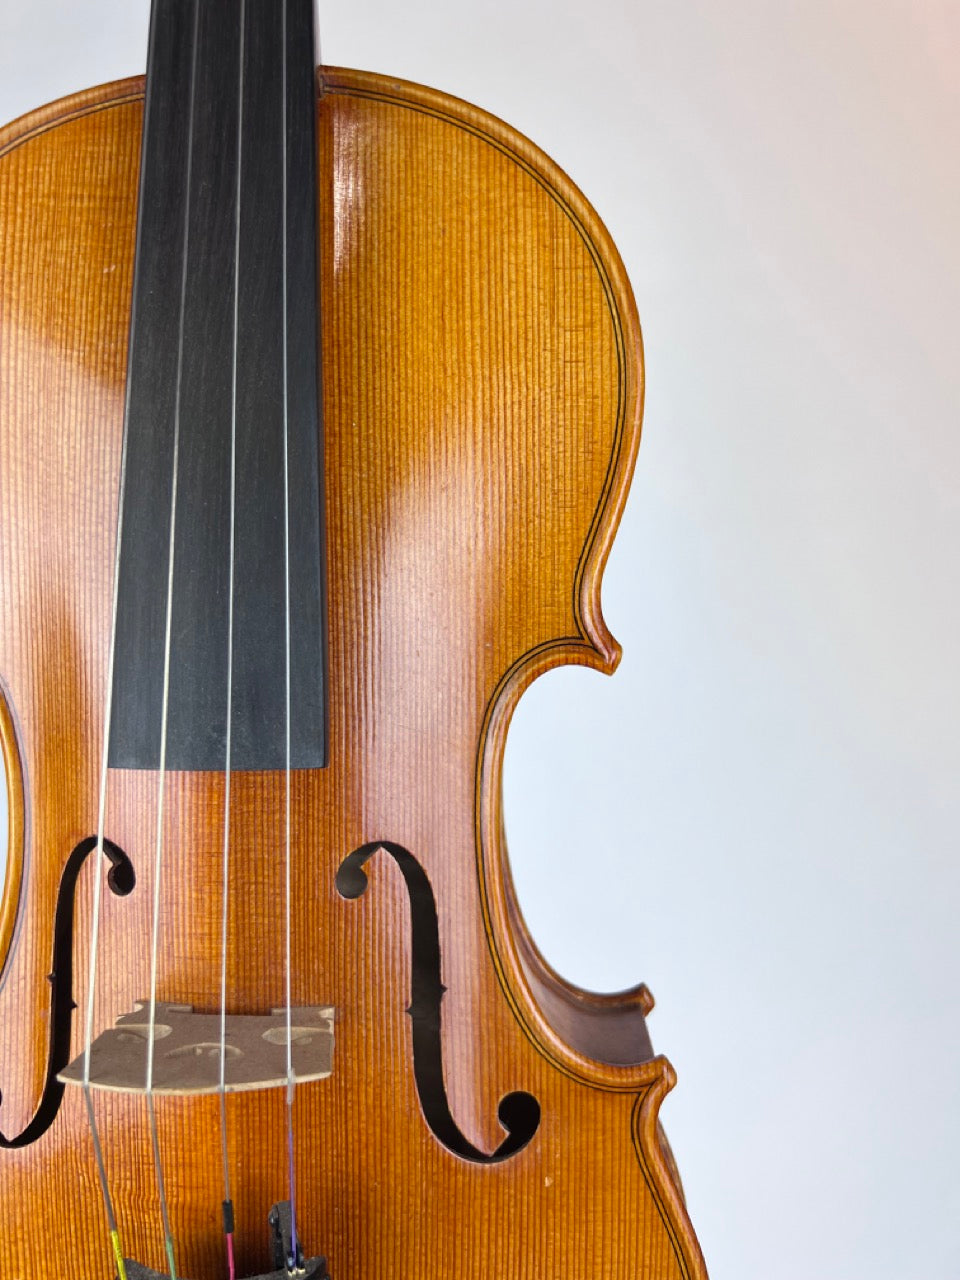 1990s Chinese Masterworks Stradivarius Violin Copy